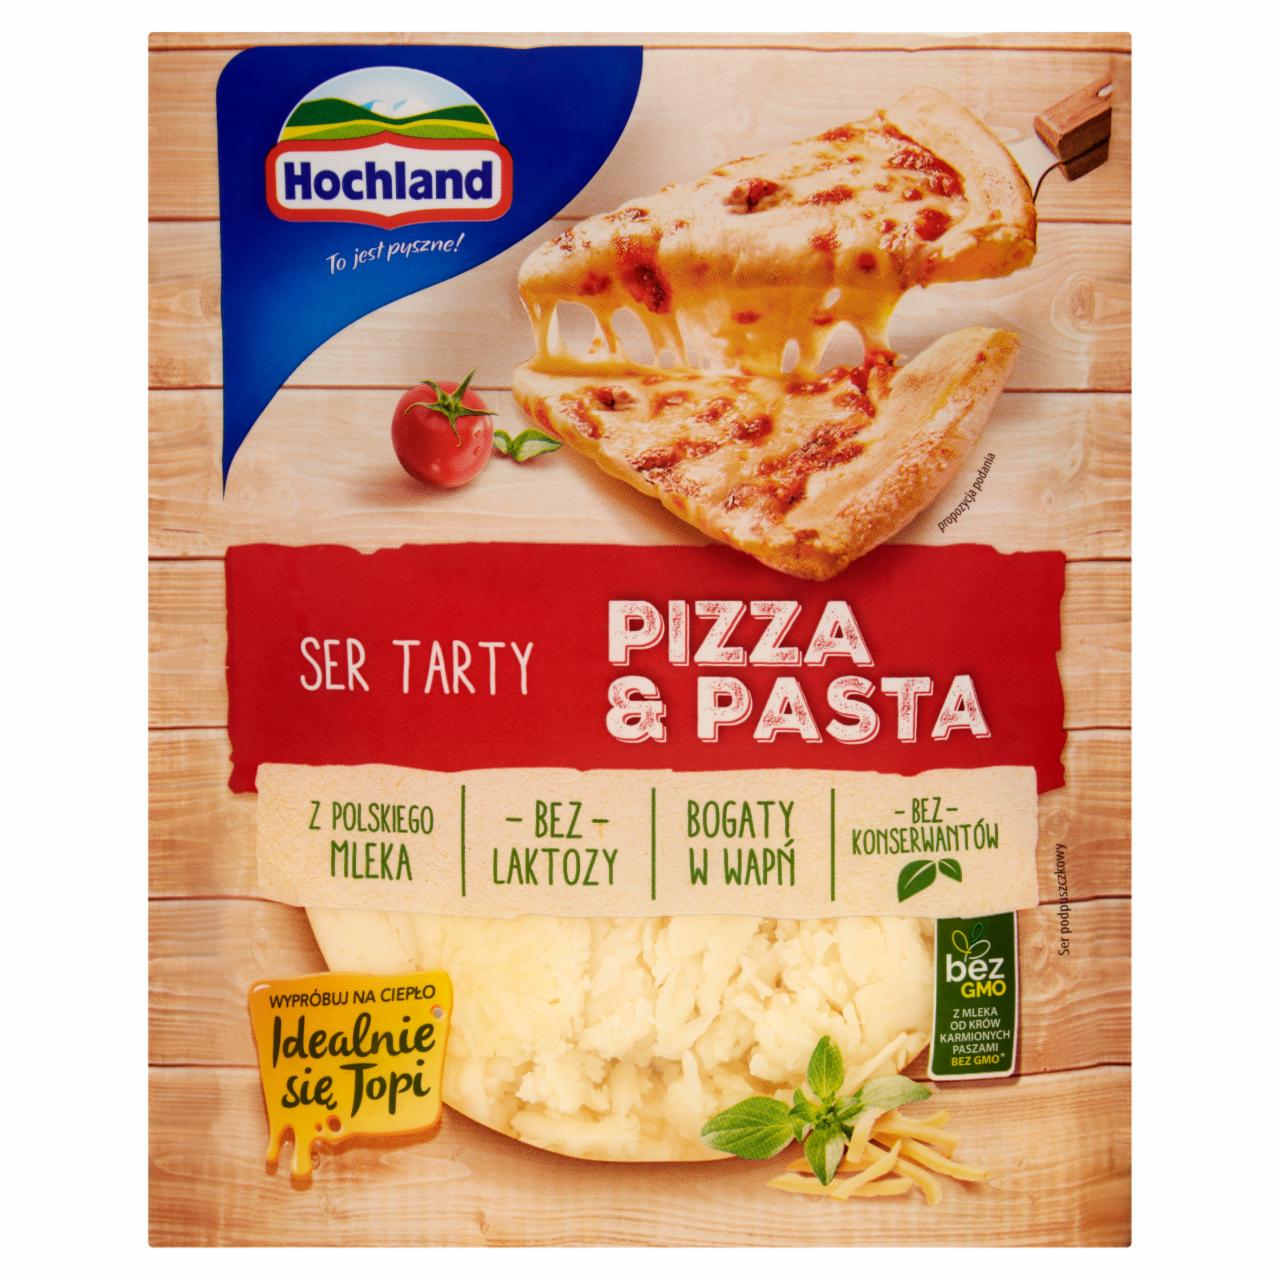 Zdjęcia - Hochland Pizza & Pasta Ser tarty 150 g